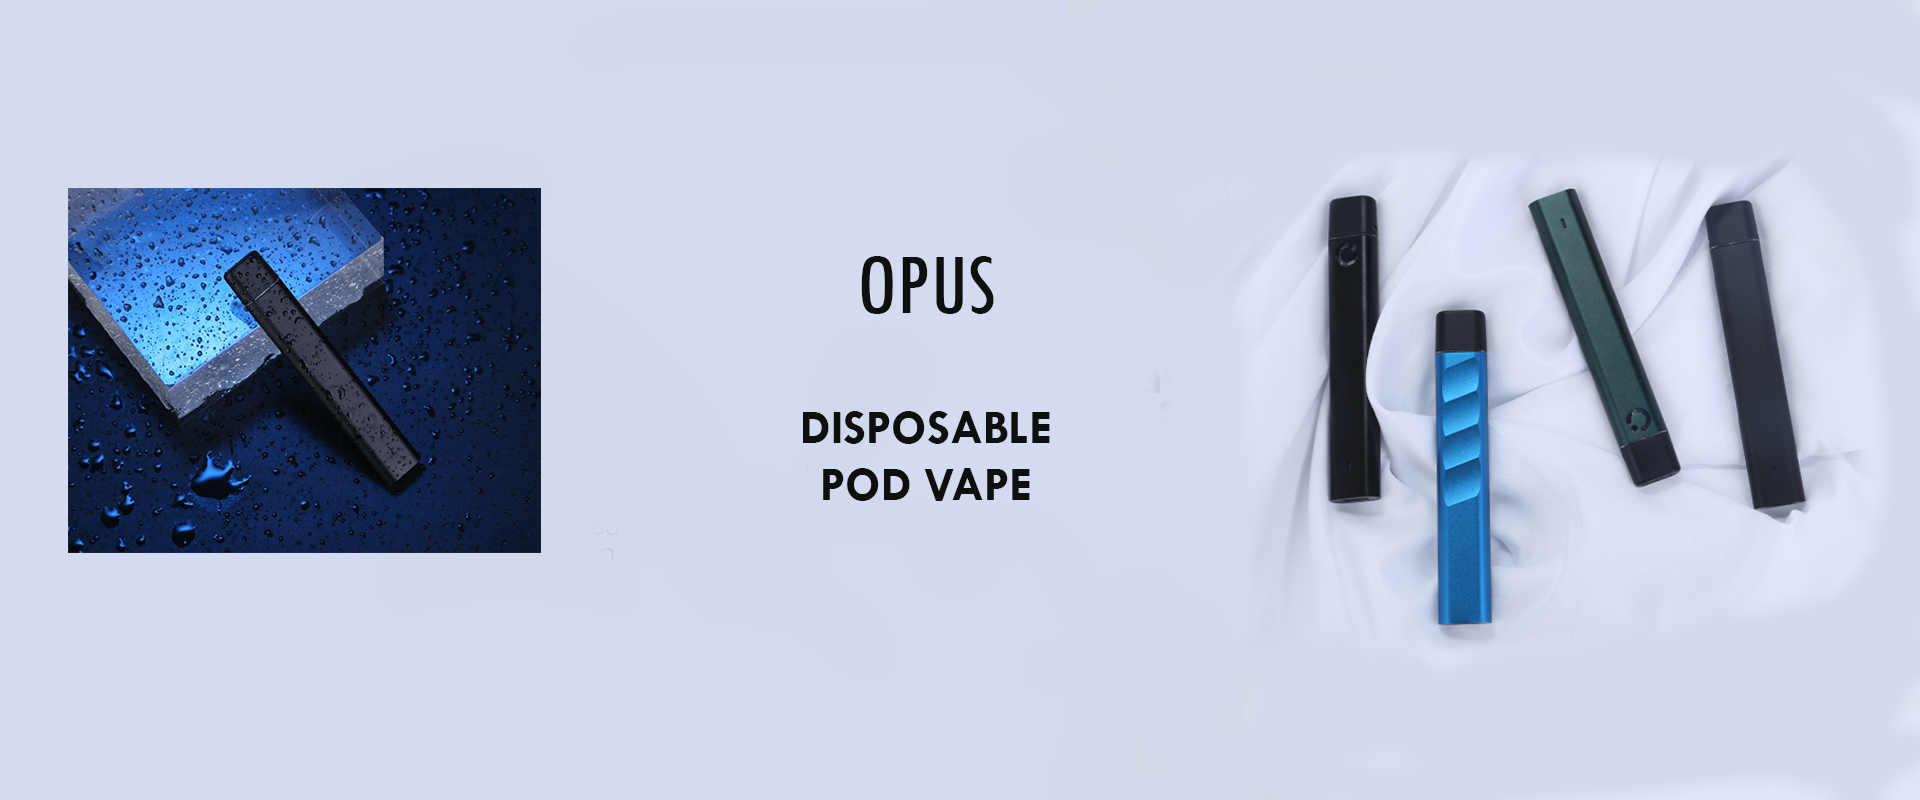 OPUS Disposable Pod Vape